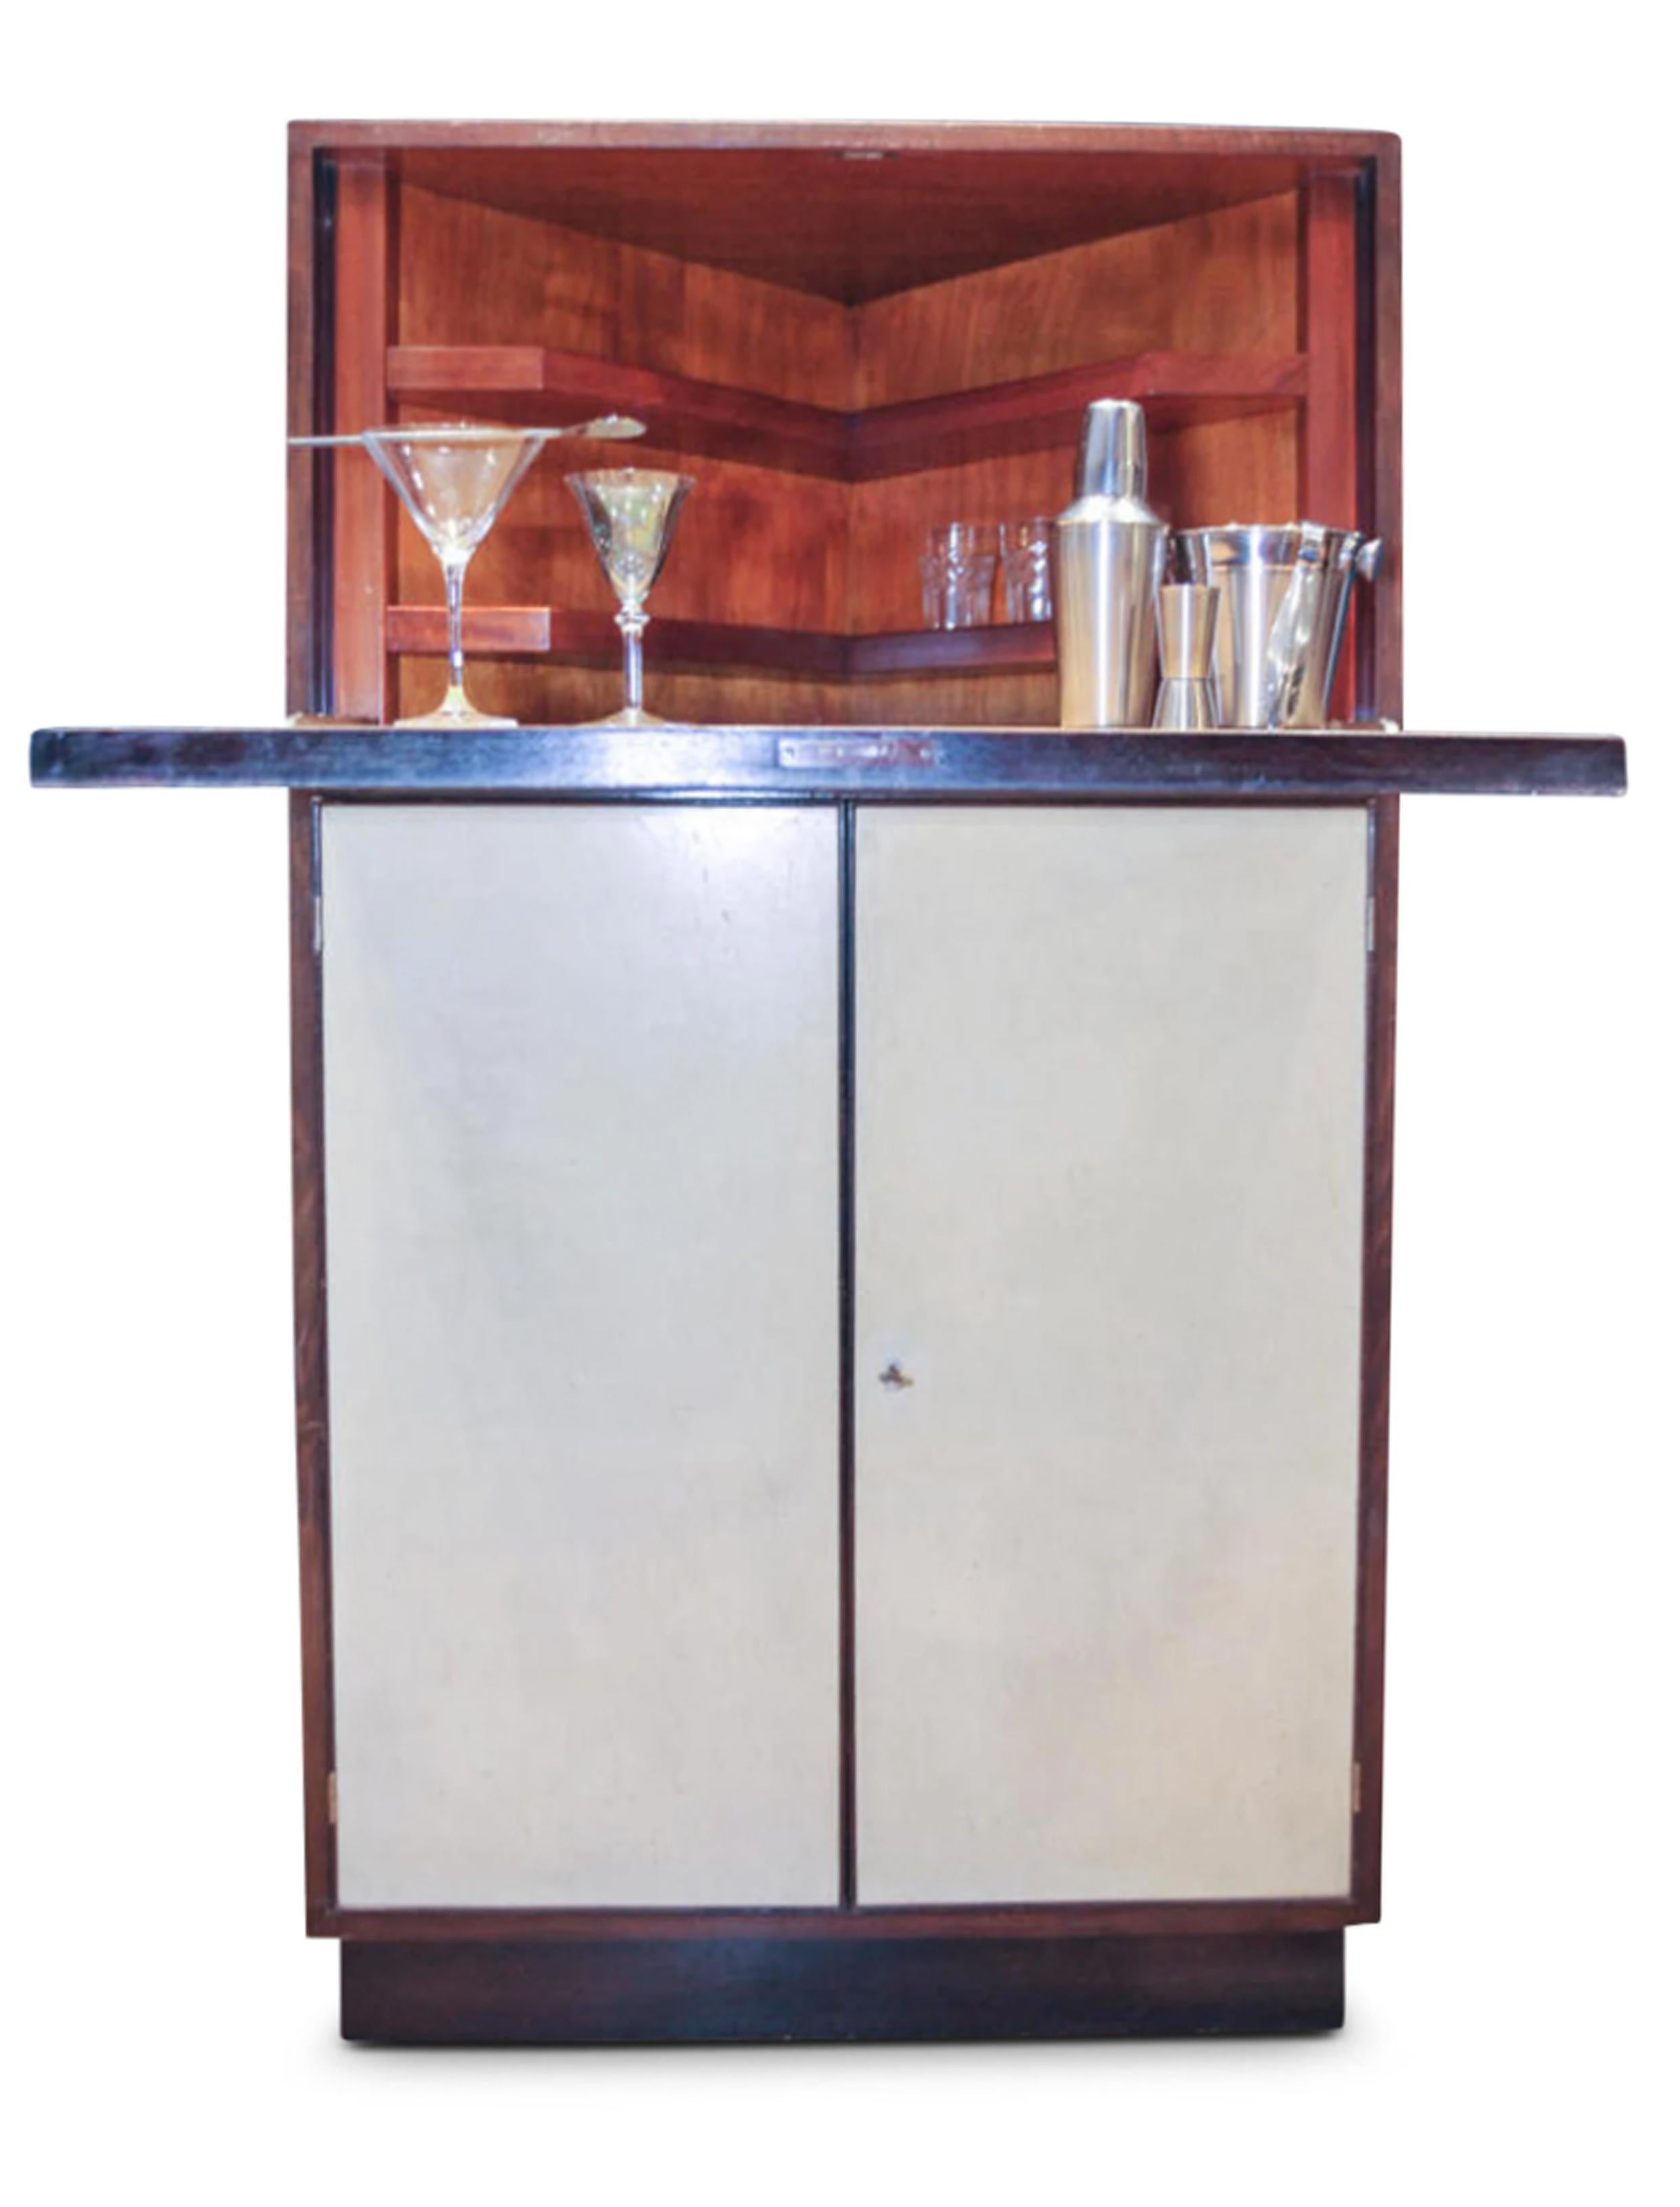 Bauhaus Cocktail Cabinet by Marcel Louis Baugniet with Makers Emblem, 1920s For Sale 1